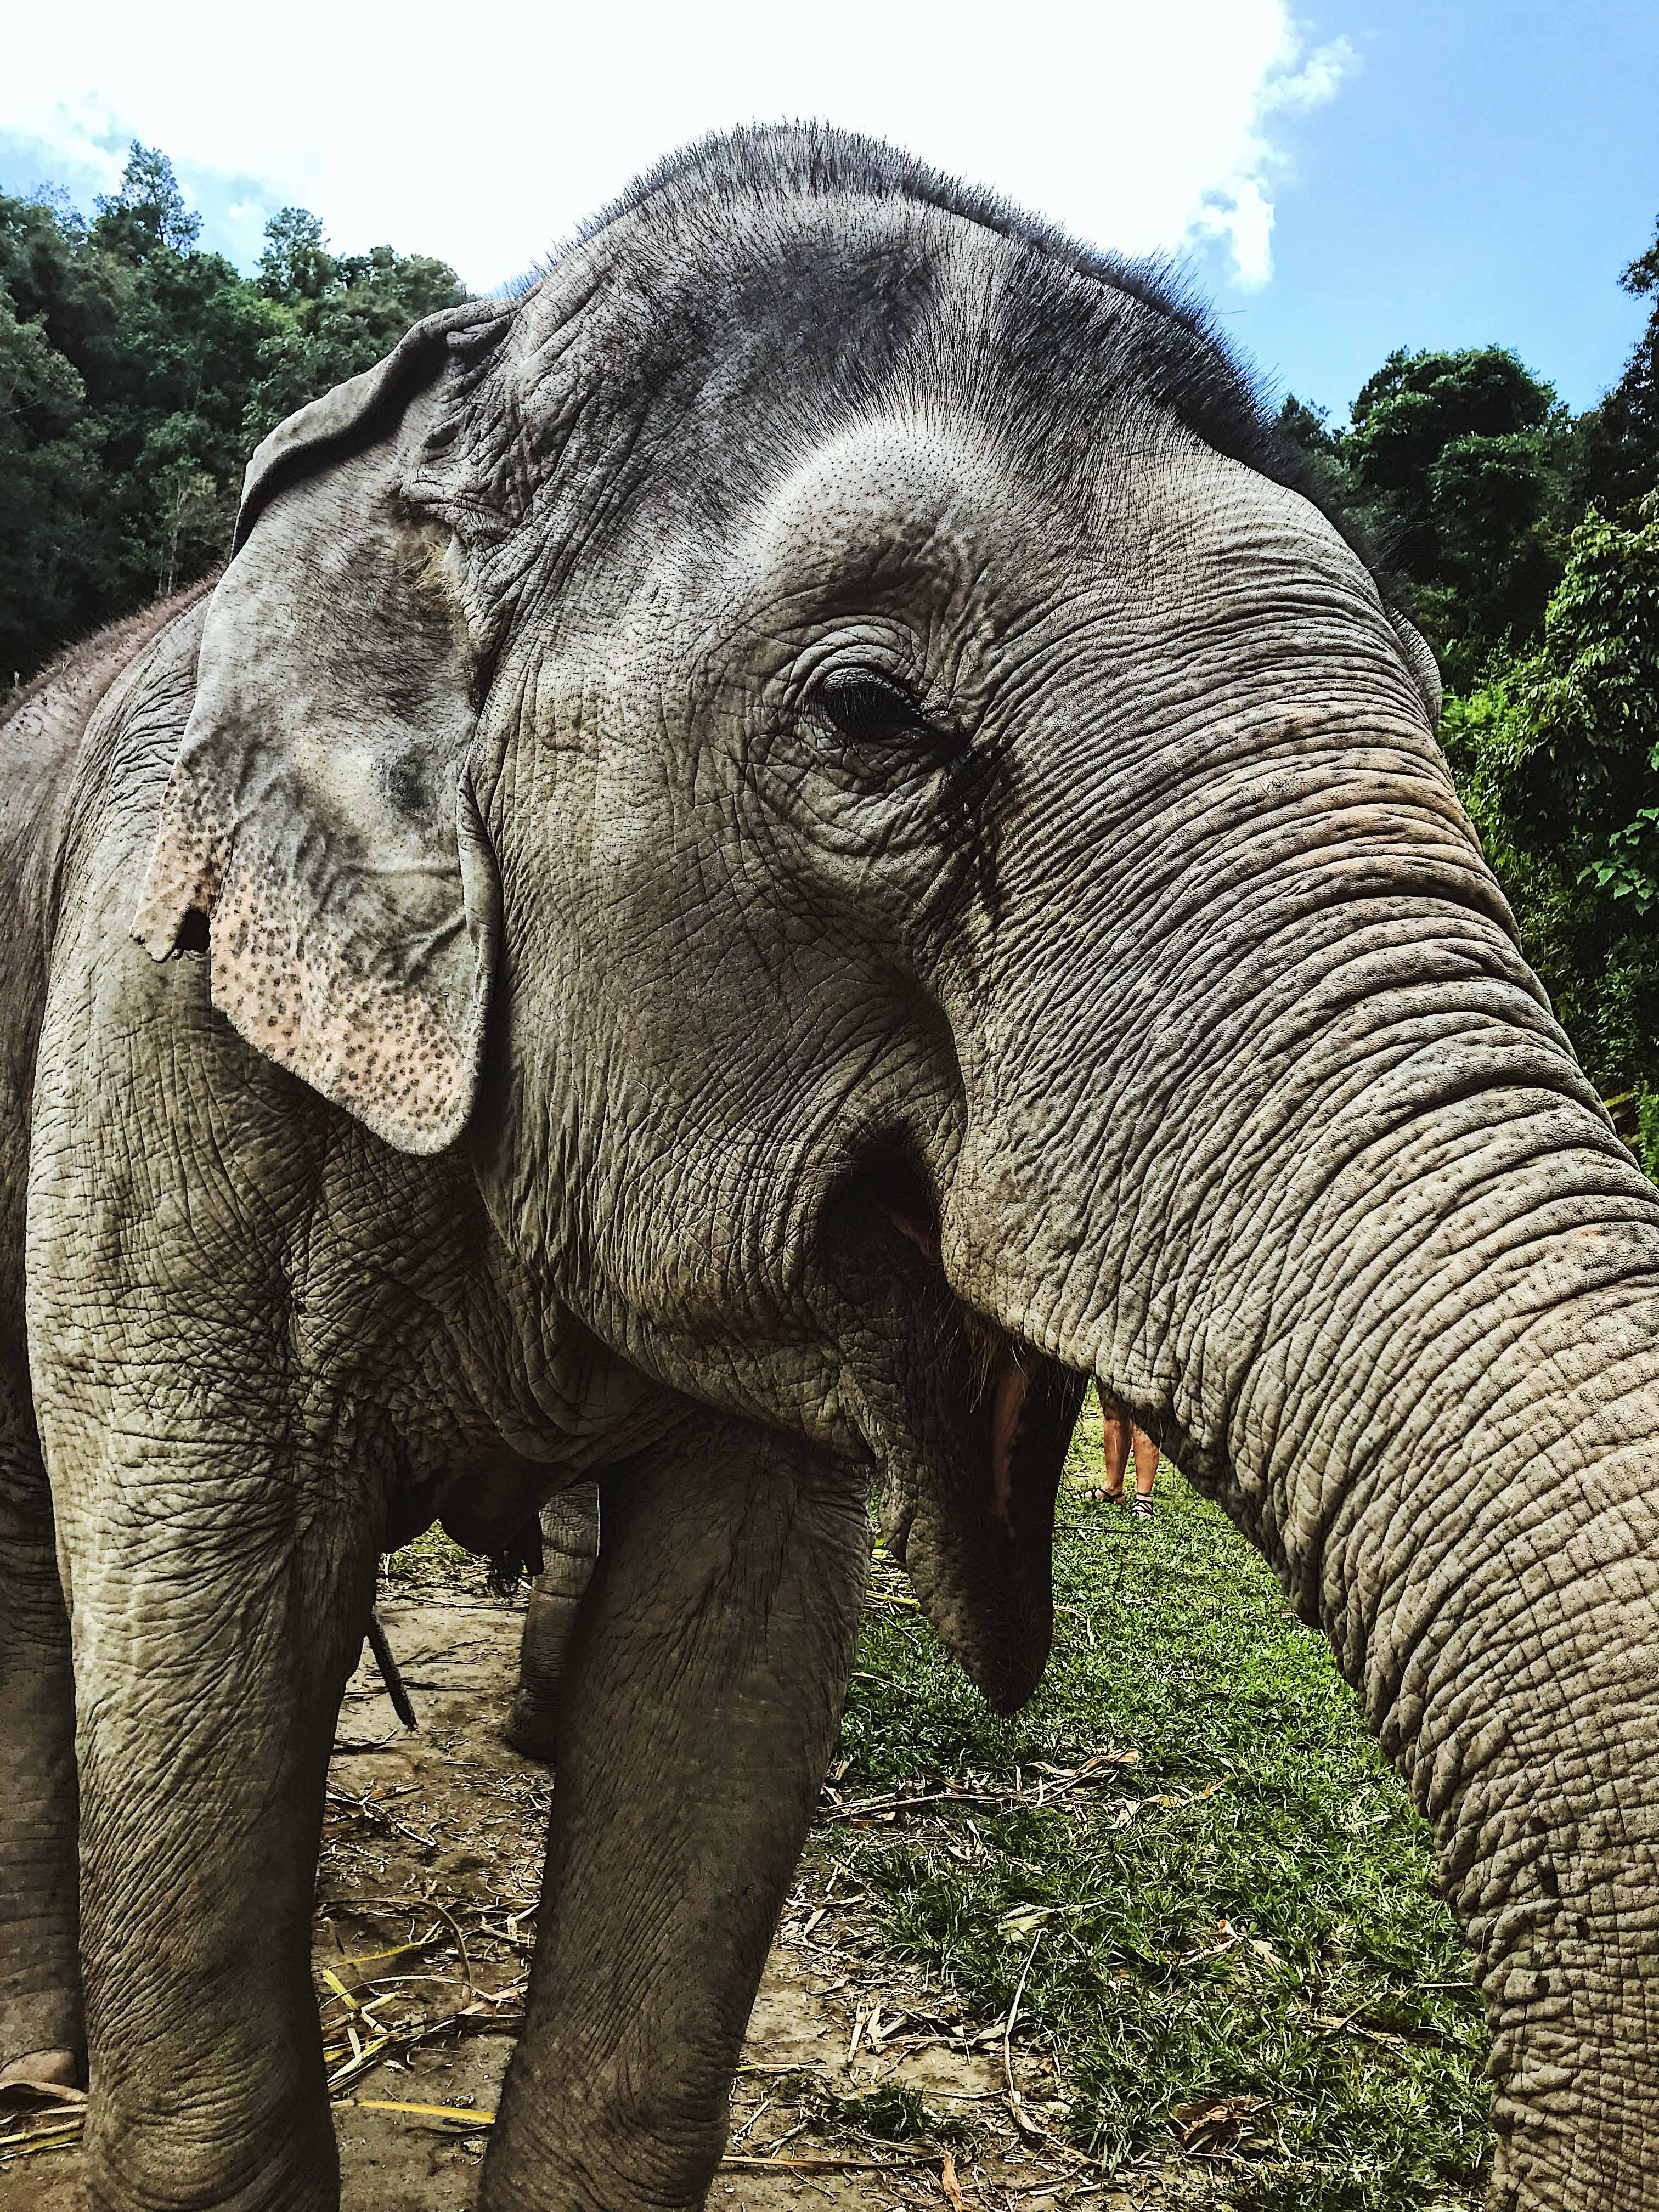 Peter the Elephant at Elephant Jungle Sanctuary Chiang Mai